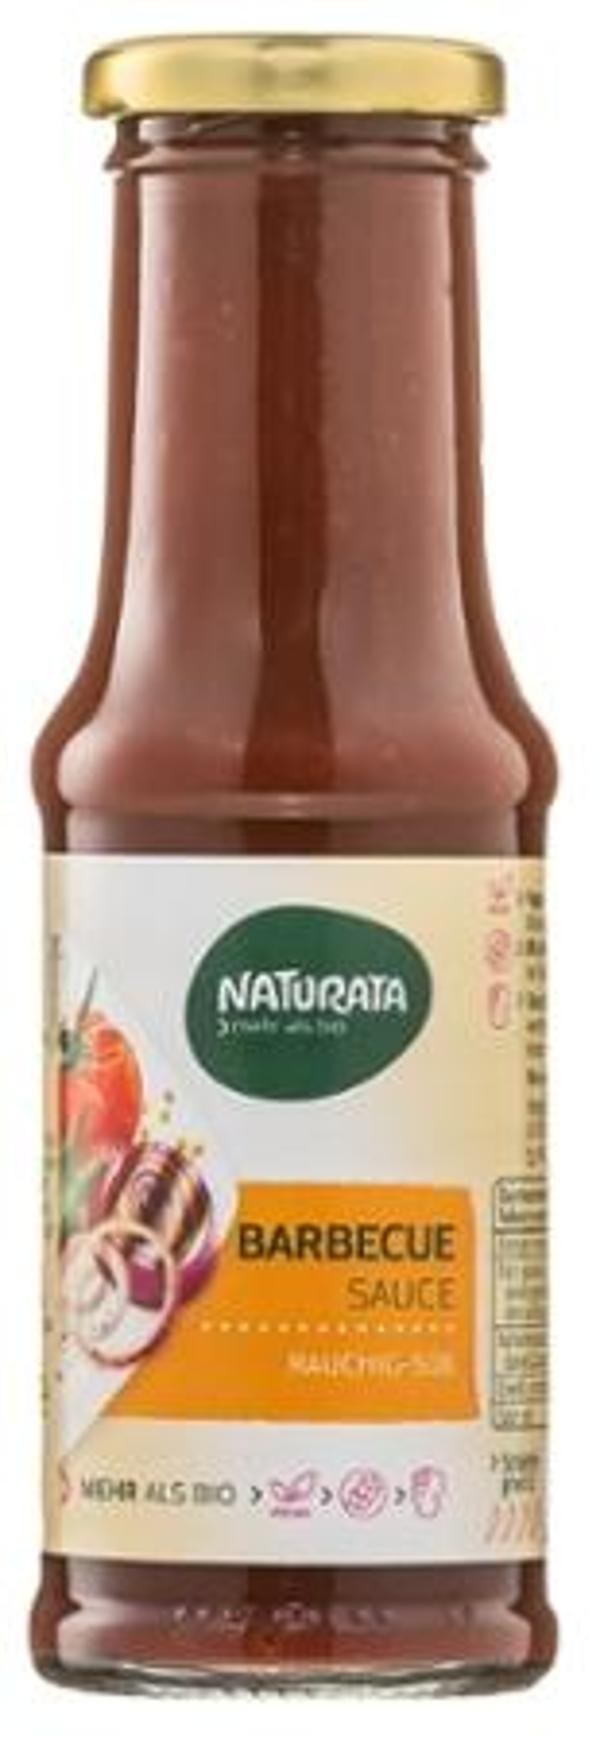 Produktfoto zu Naturata Barbecue Sauce 250ml